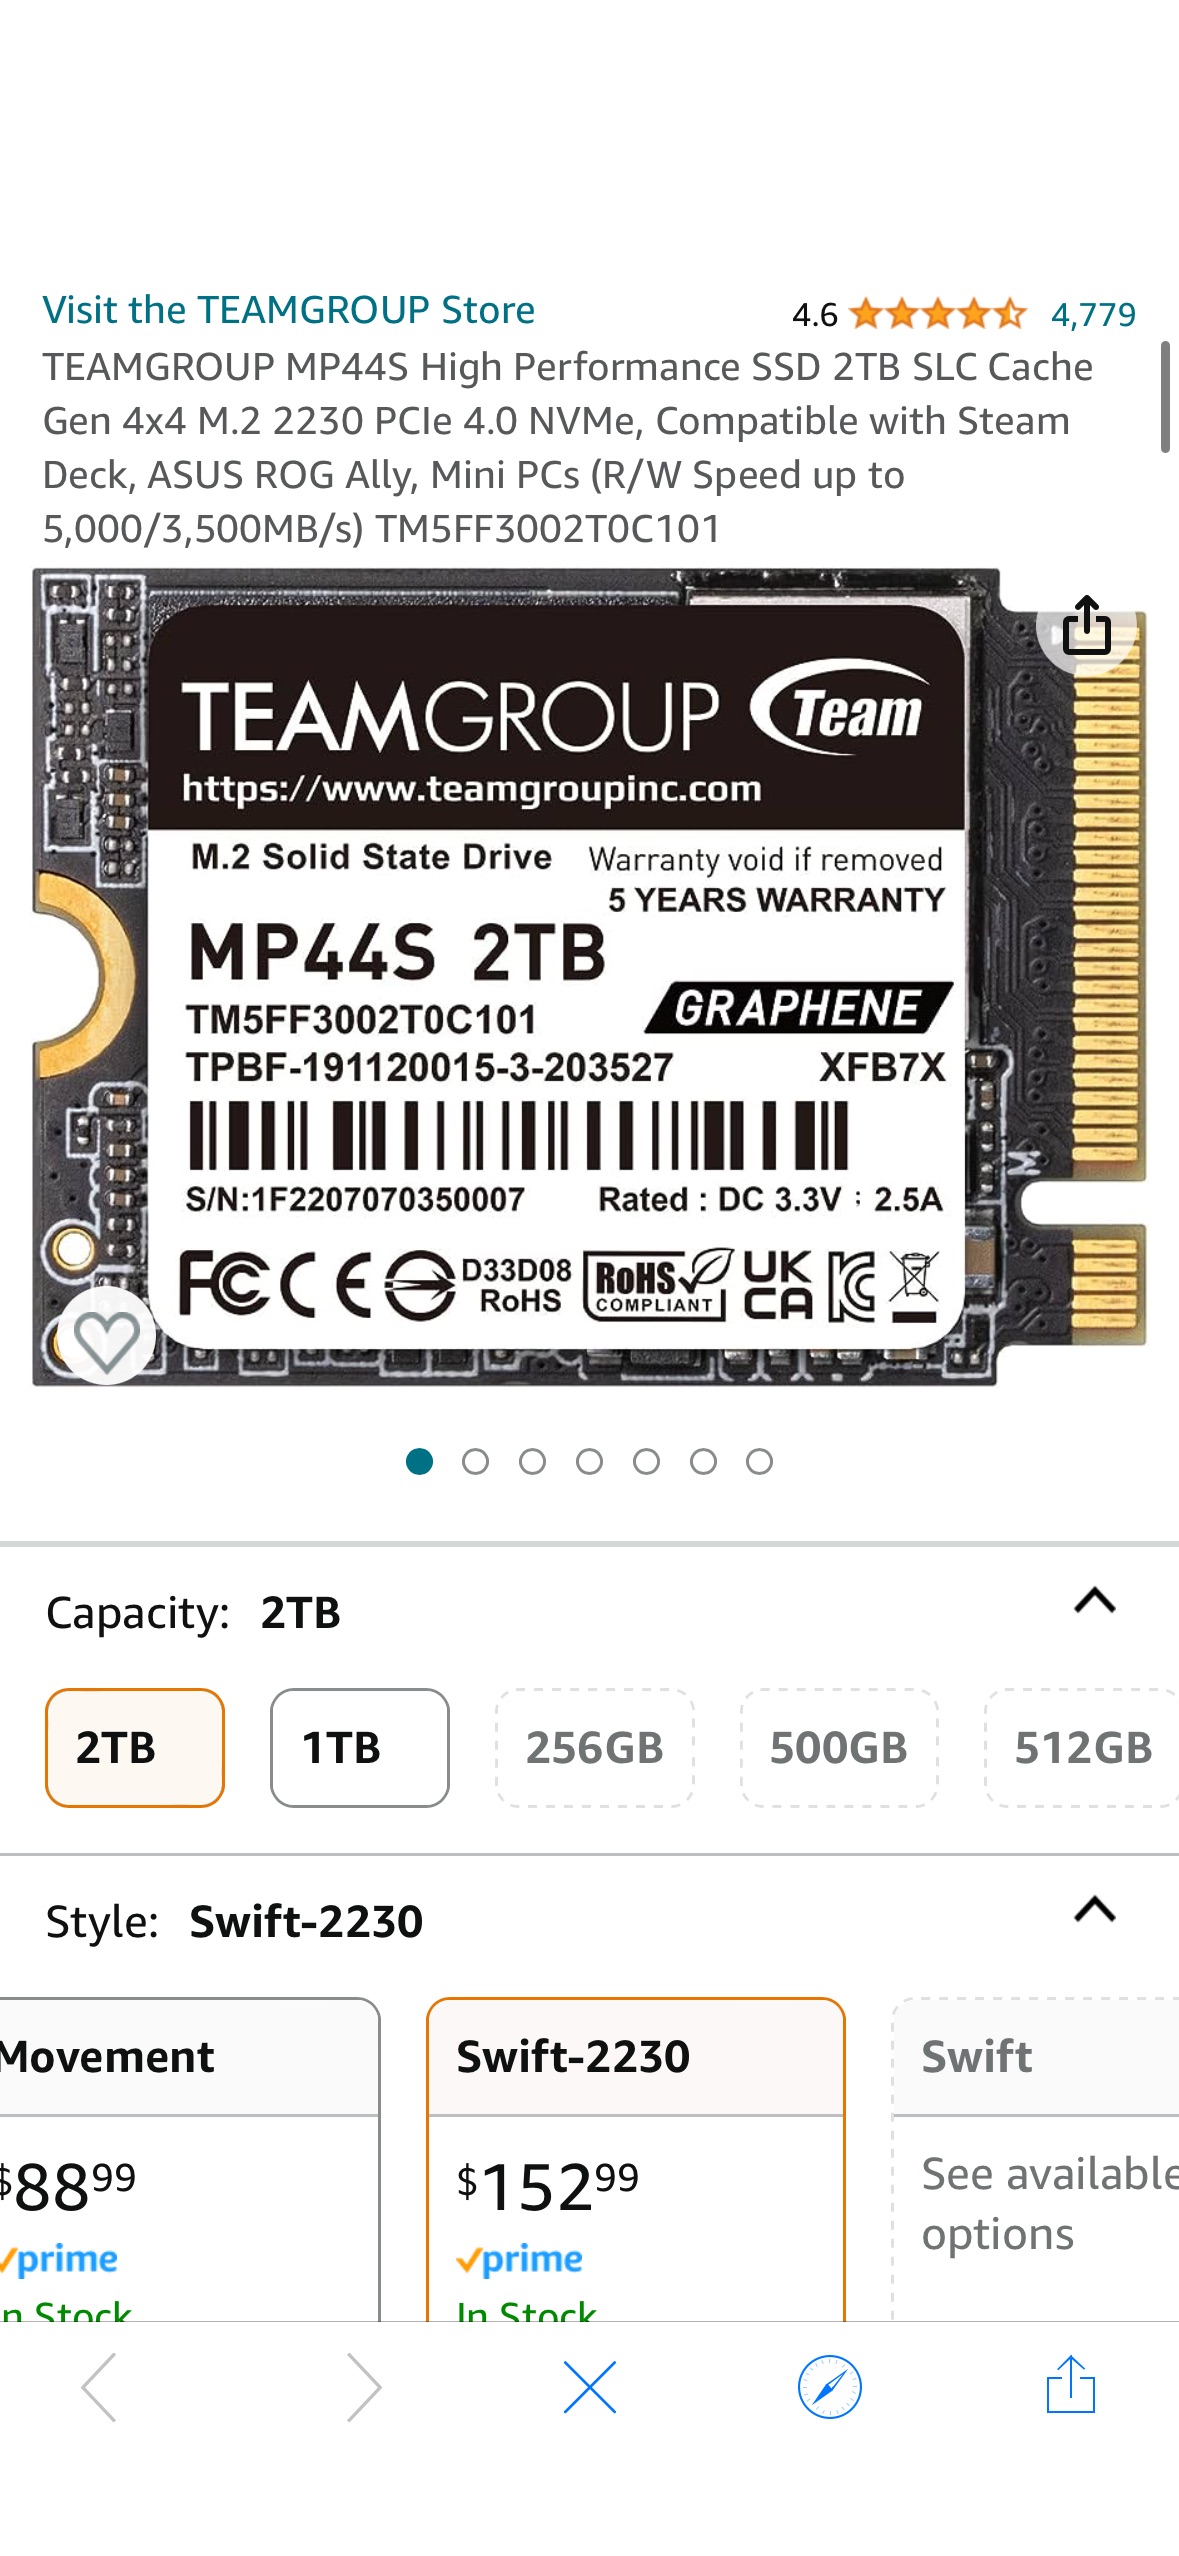 Amazon.com: TEAMGROUP MP44S High Performance SSD 2TB SLC Cache Gen 4x4 M.2 2230 PCIe